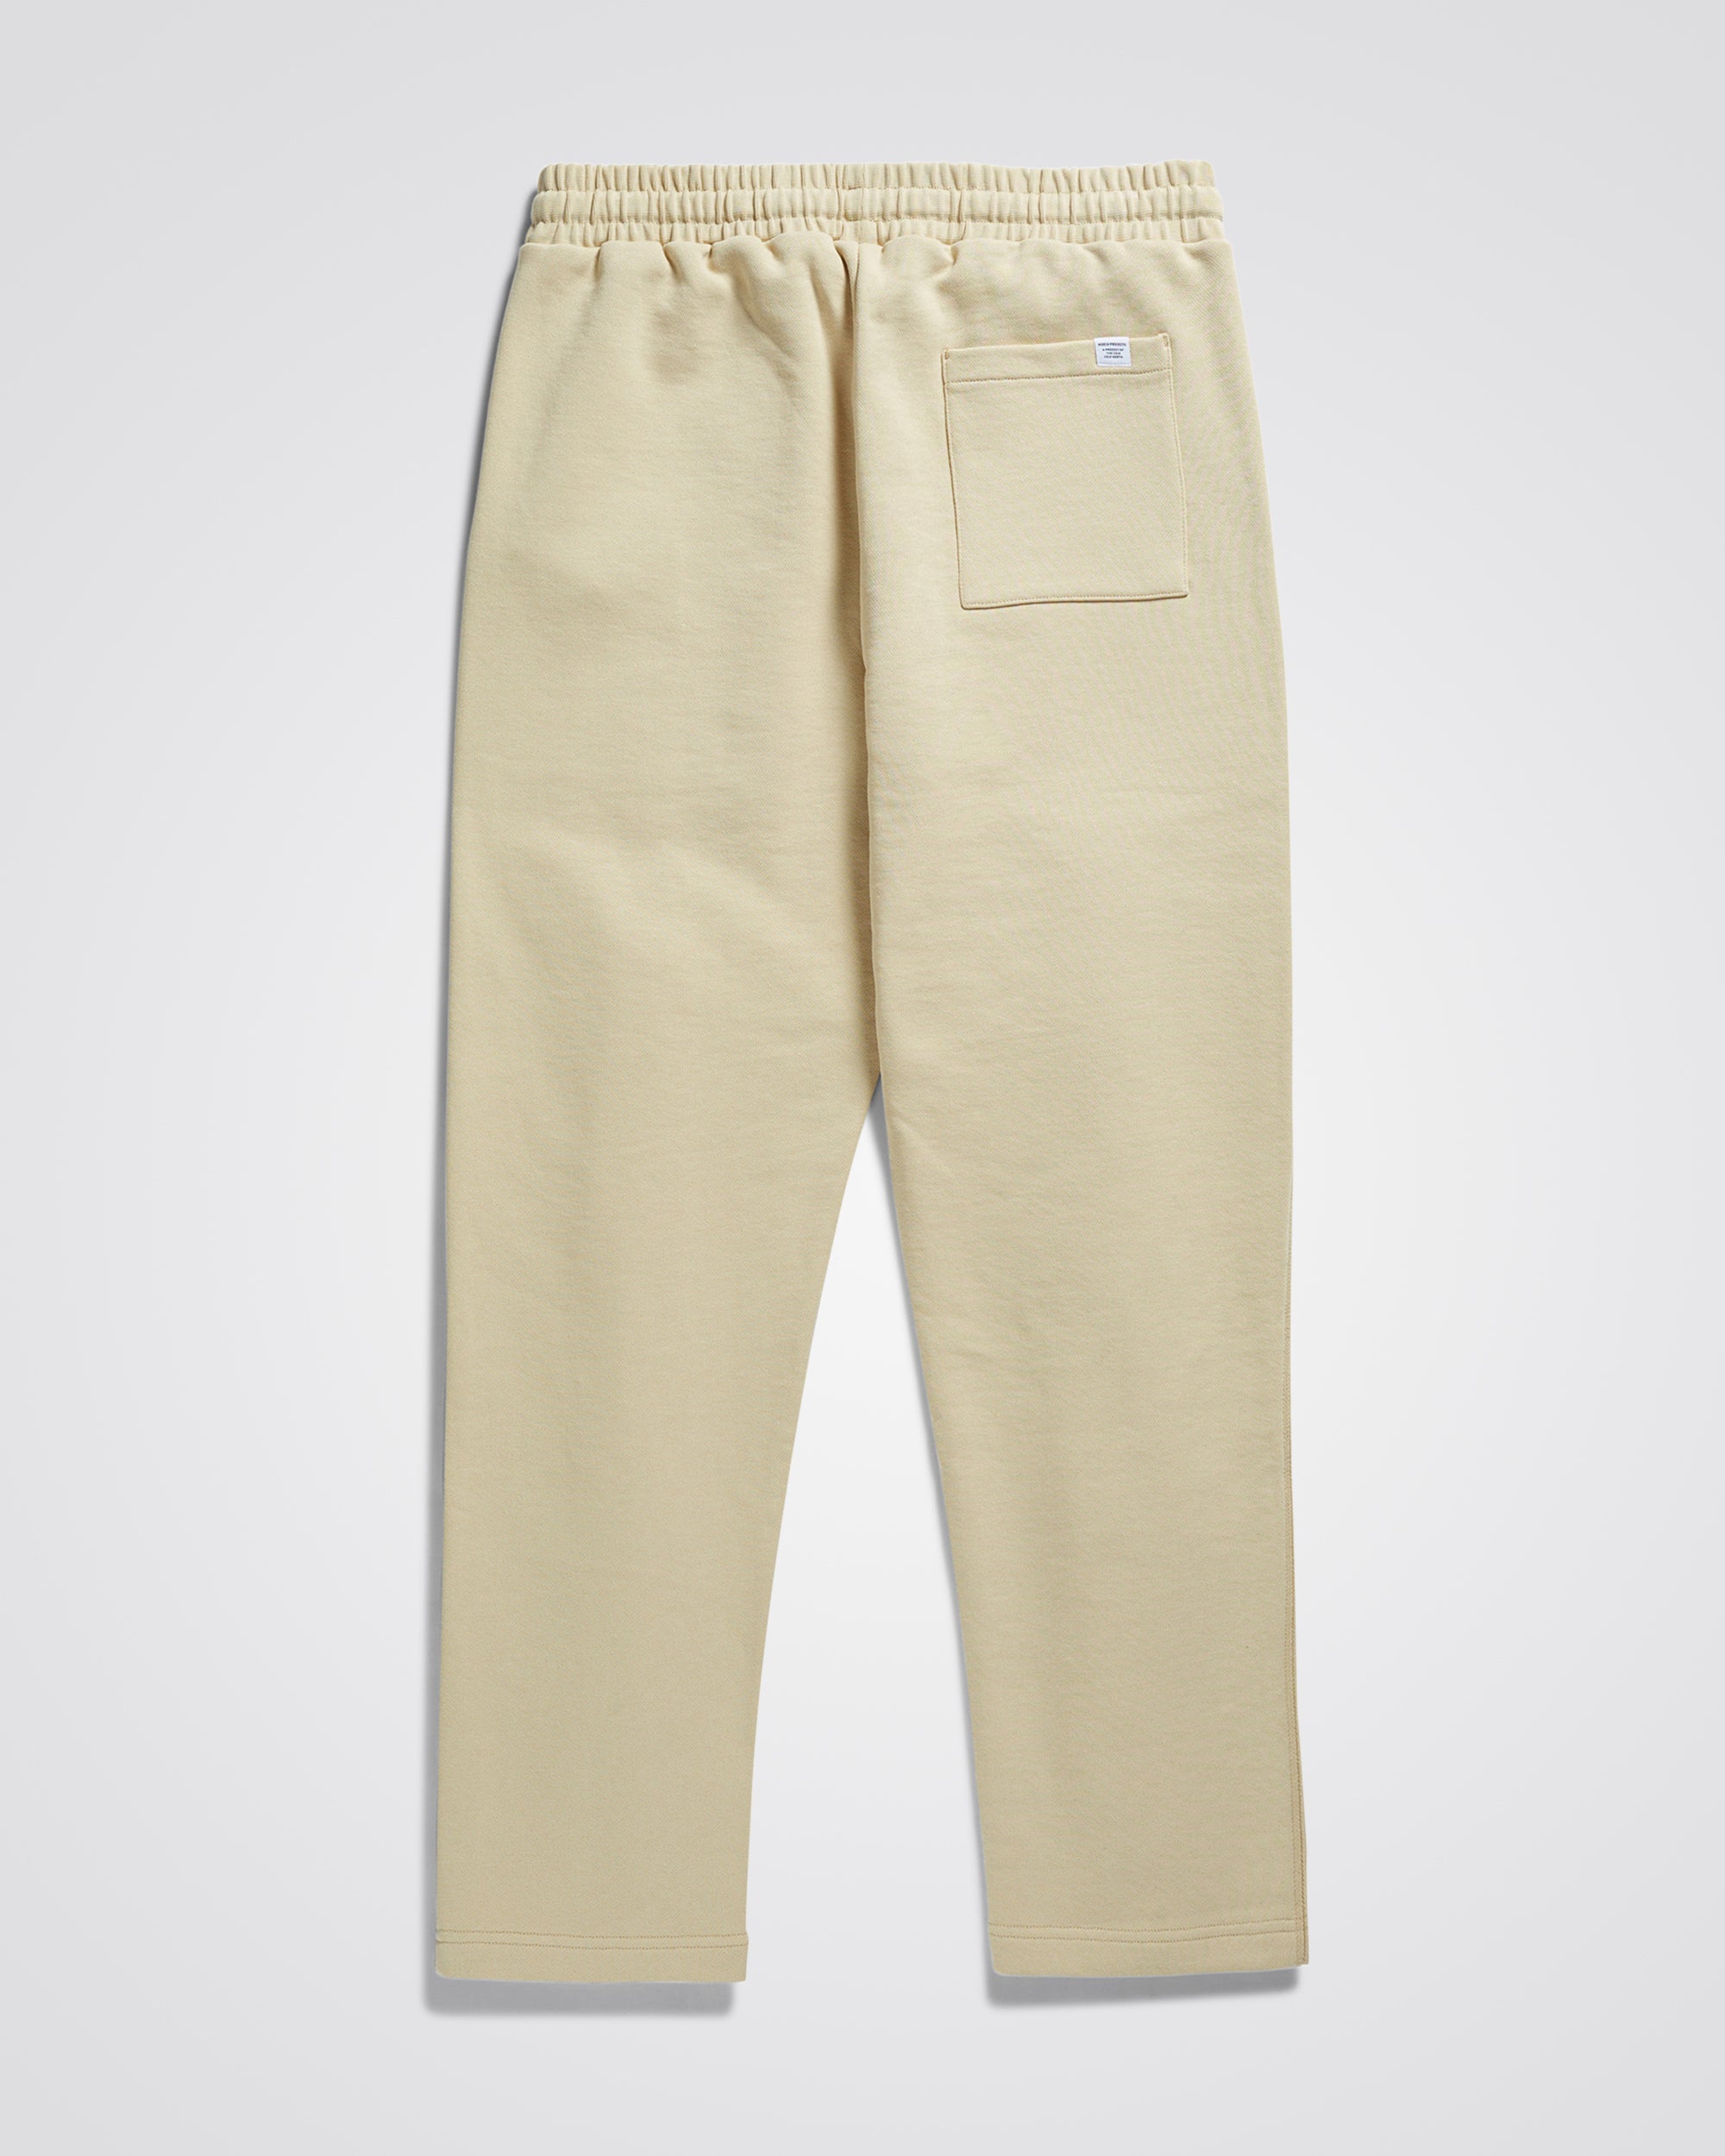 Falun Classic Sweatpants - Oyster White